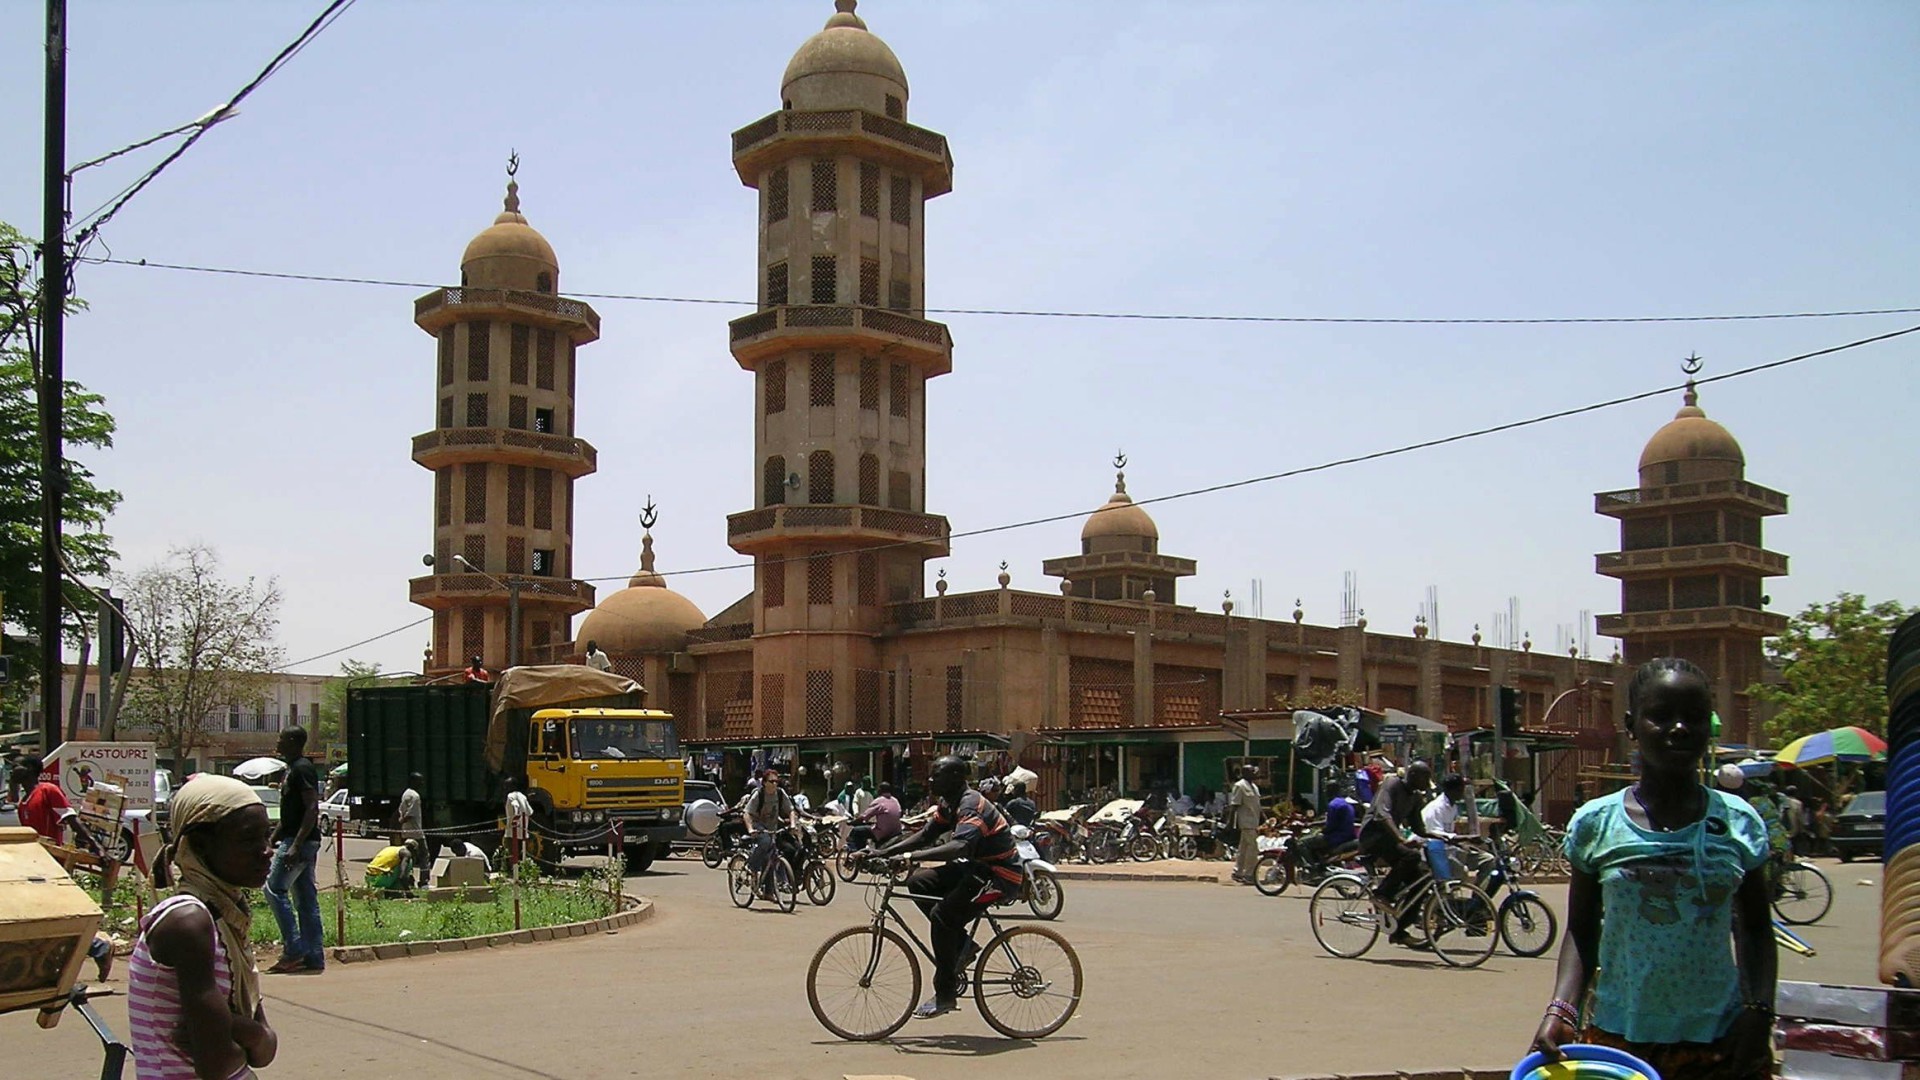 Les musulmans du Burkina Faso condamnent le terrorisme (Photo:Hughes/Flickr/CC BY-SA 2.0)